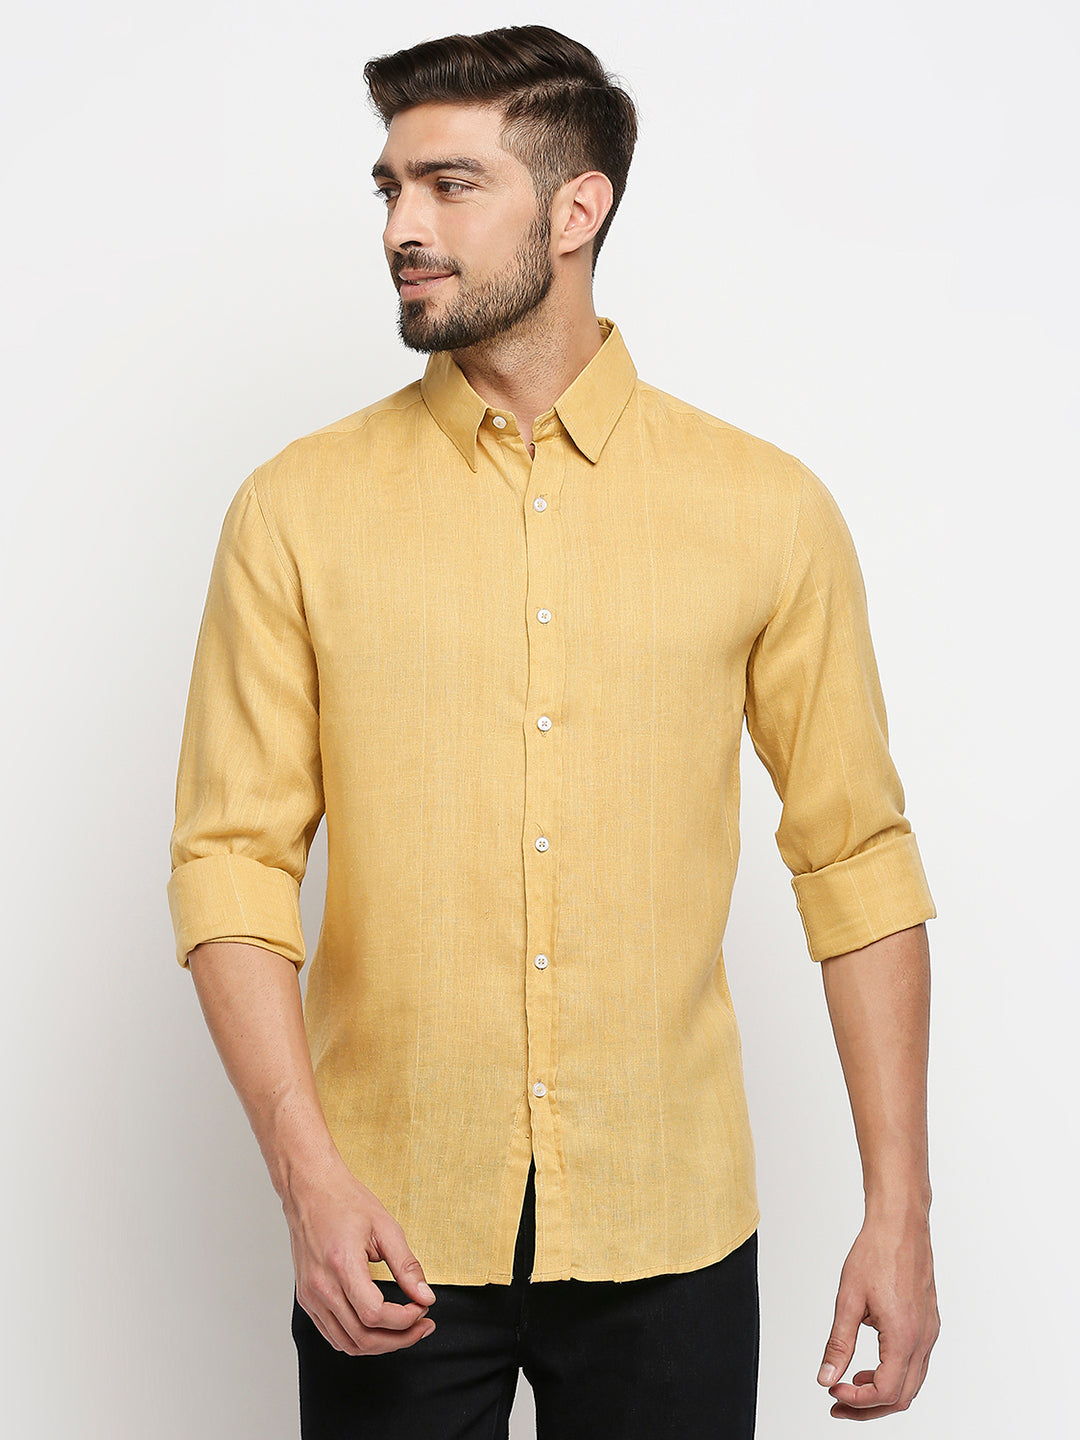 Indulge Excel Linen Khaki Shirt